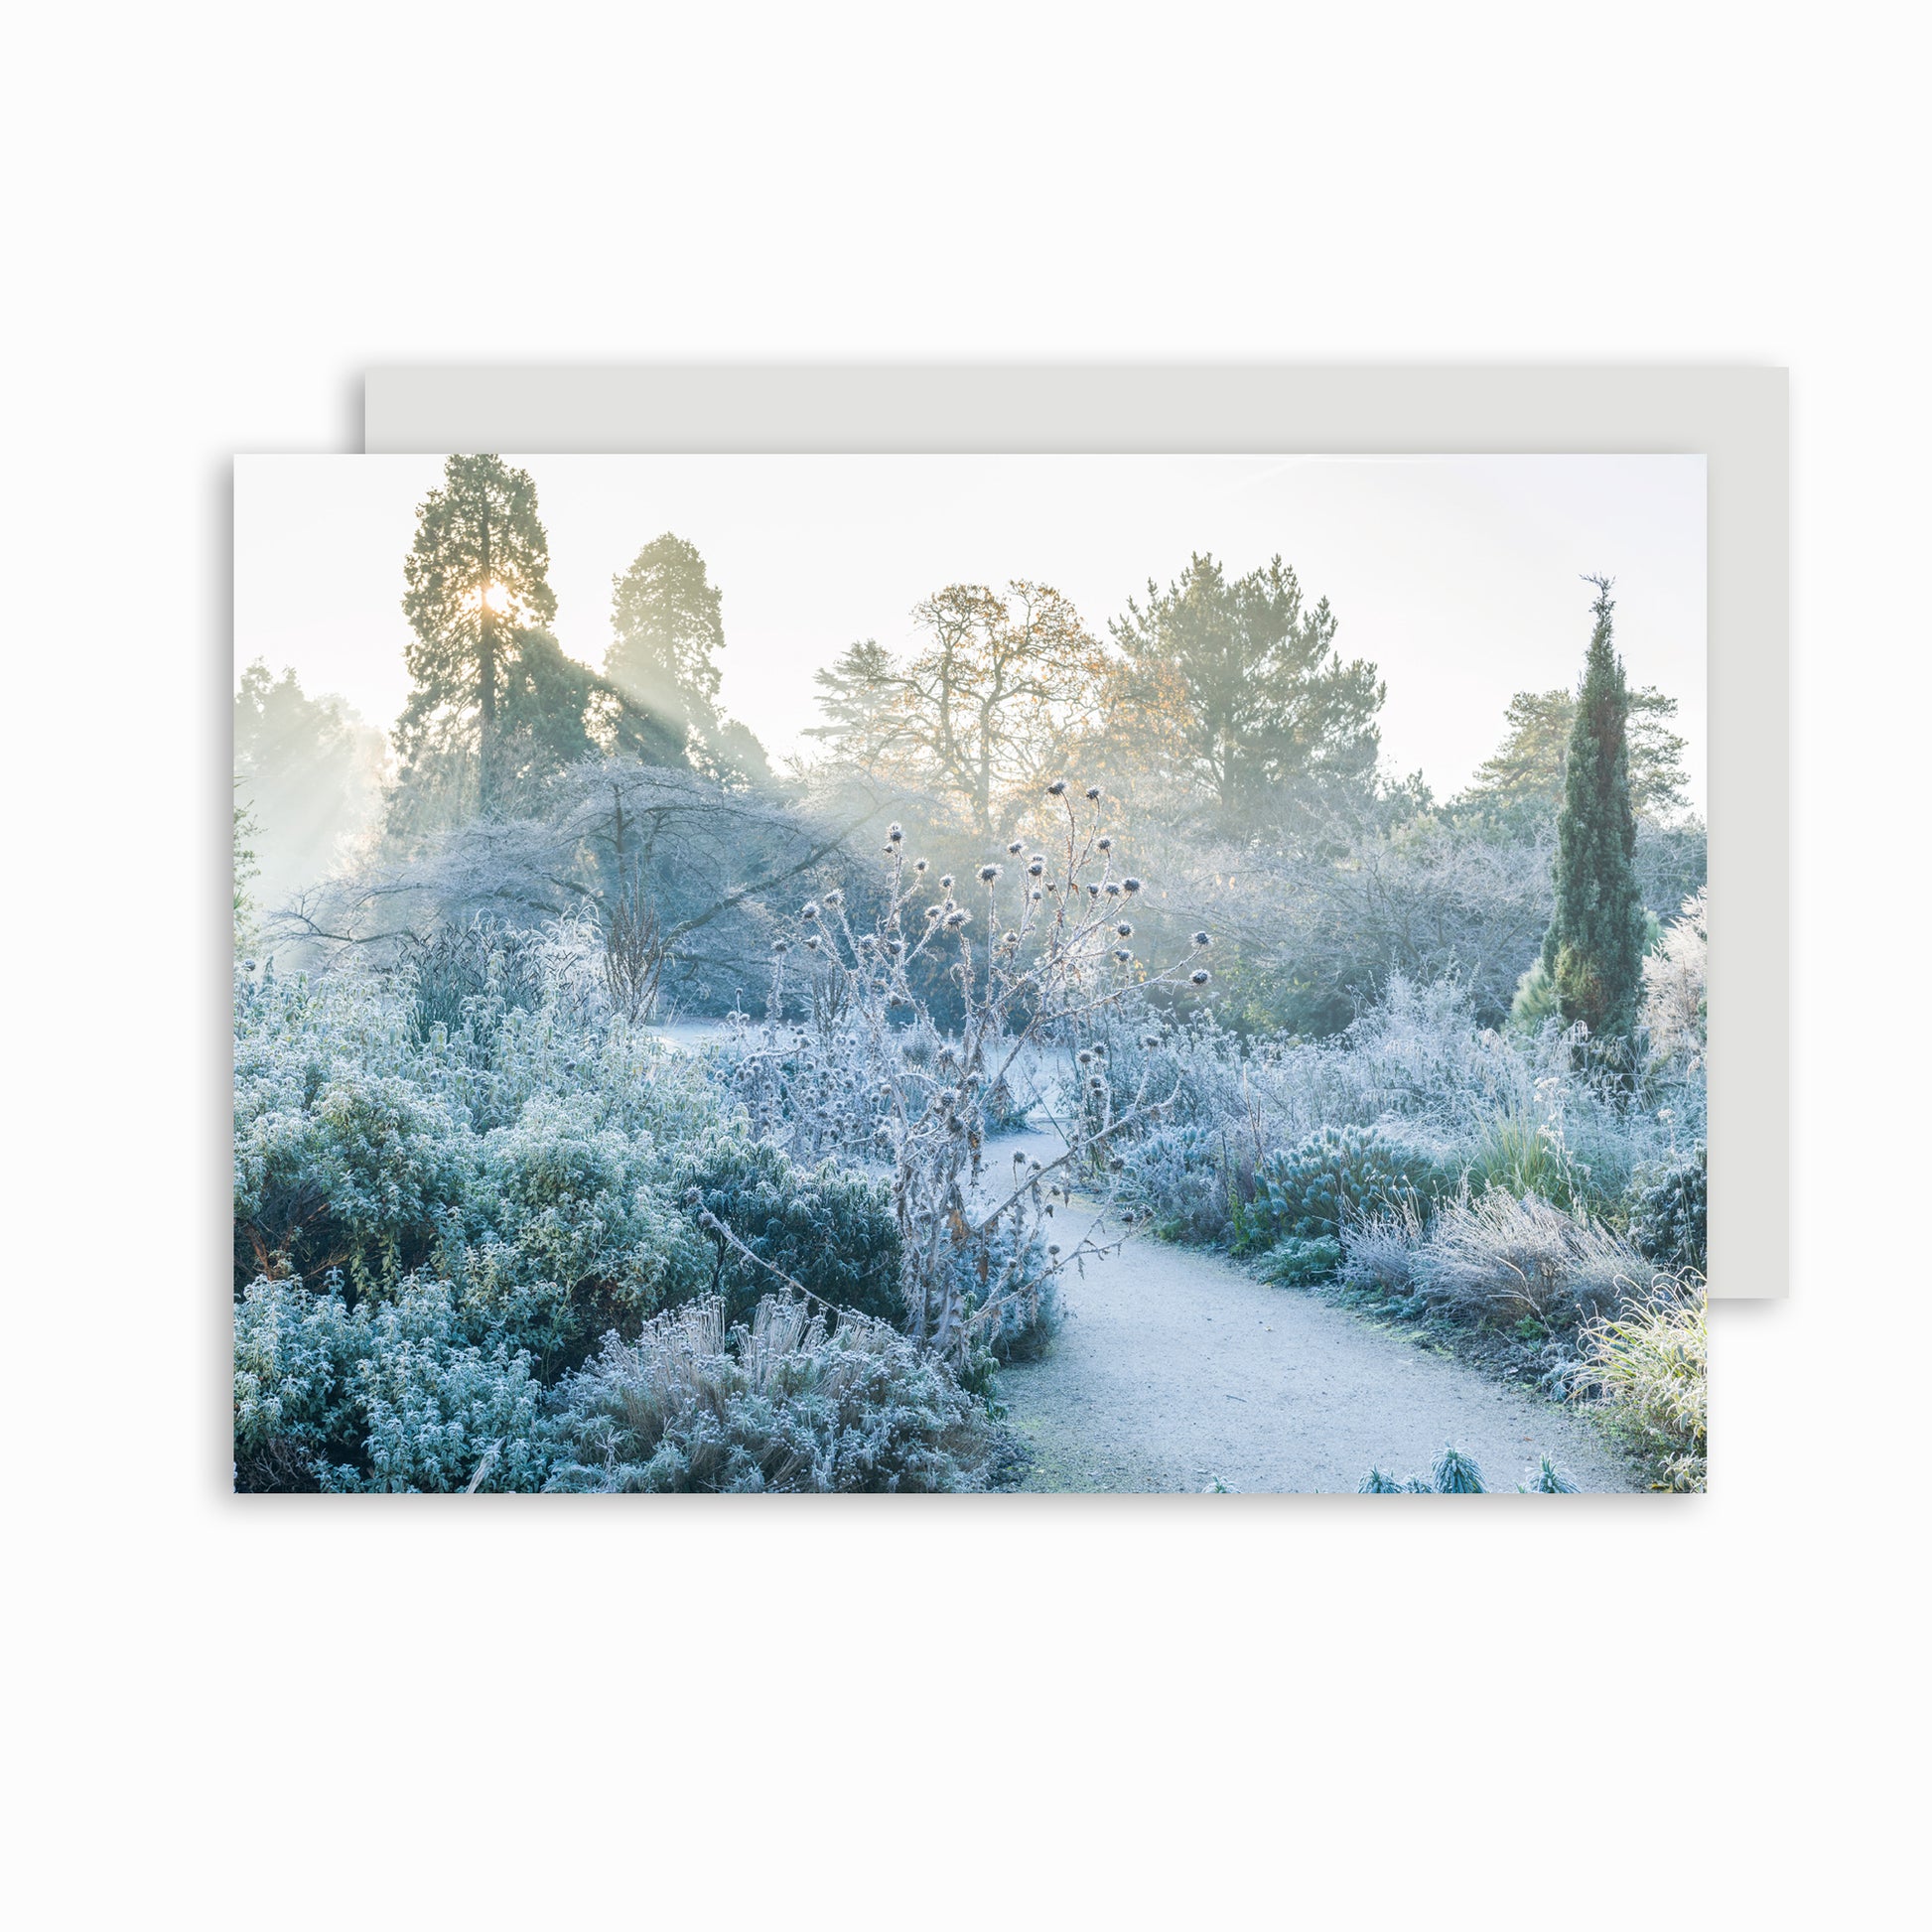 Christmas card of frosty winter scene at Cambridge University Botanic Gardens